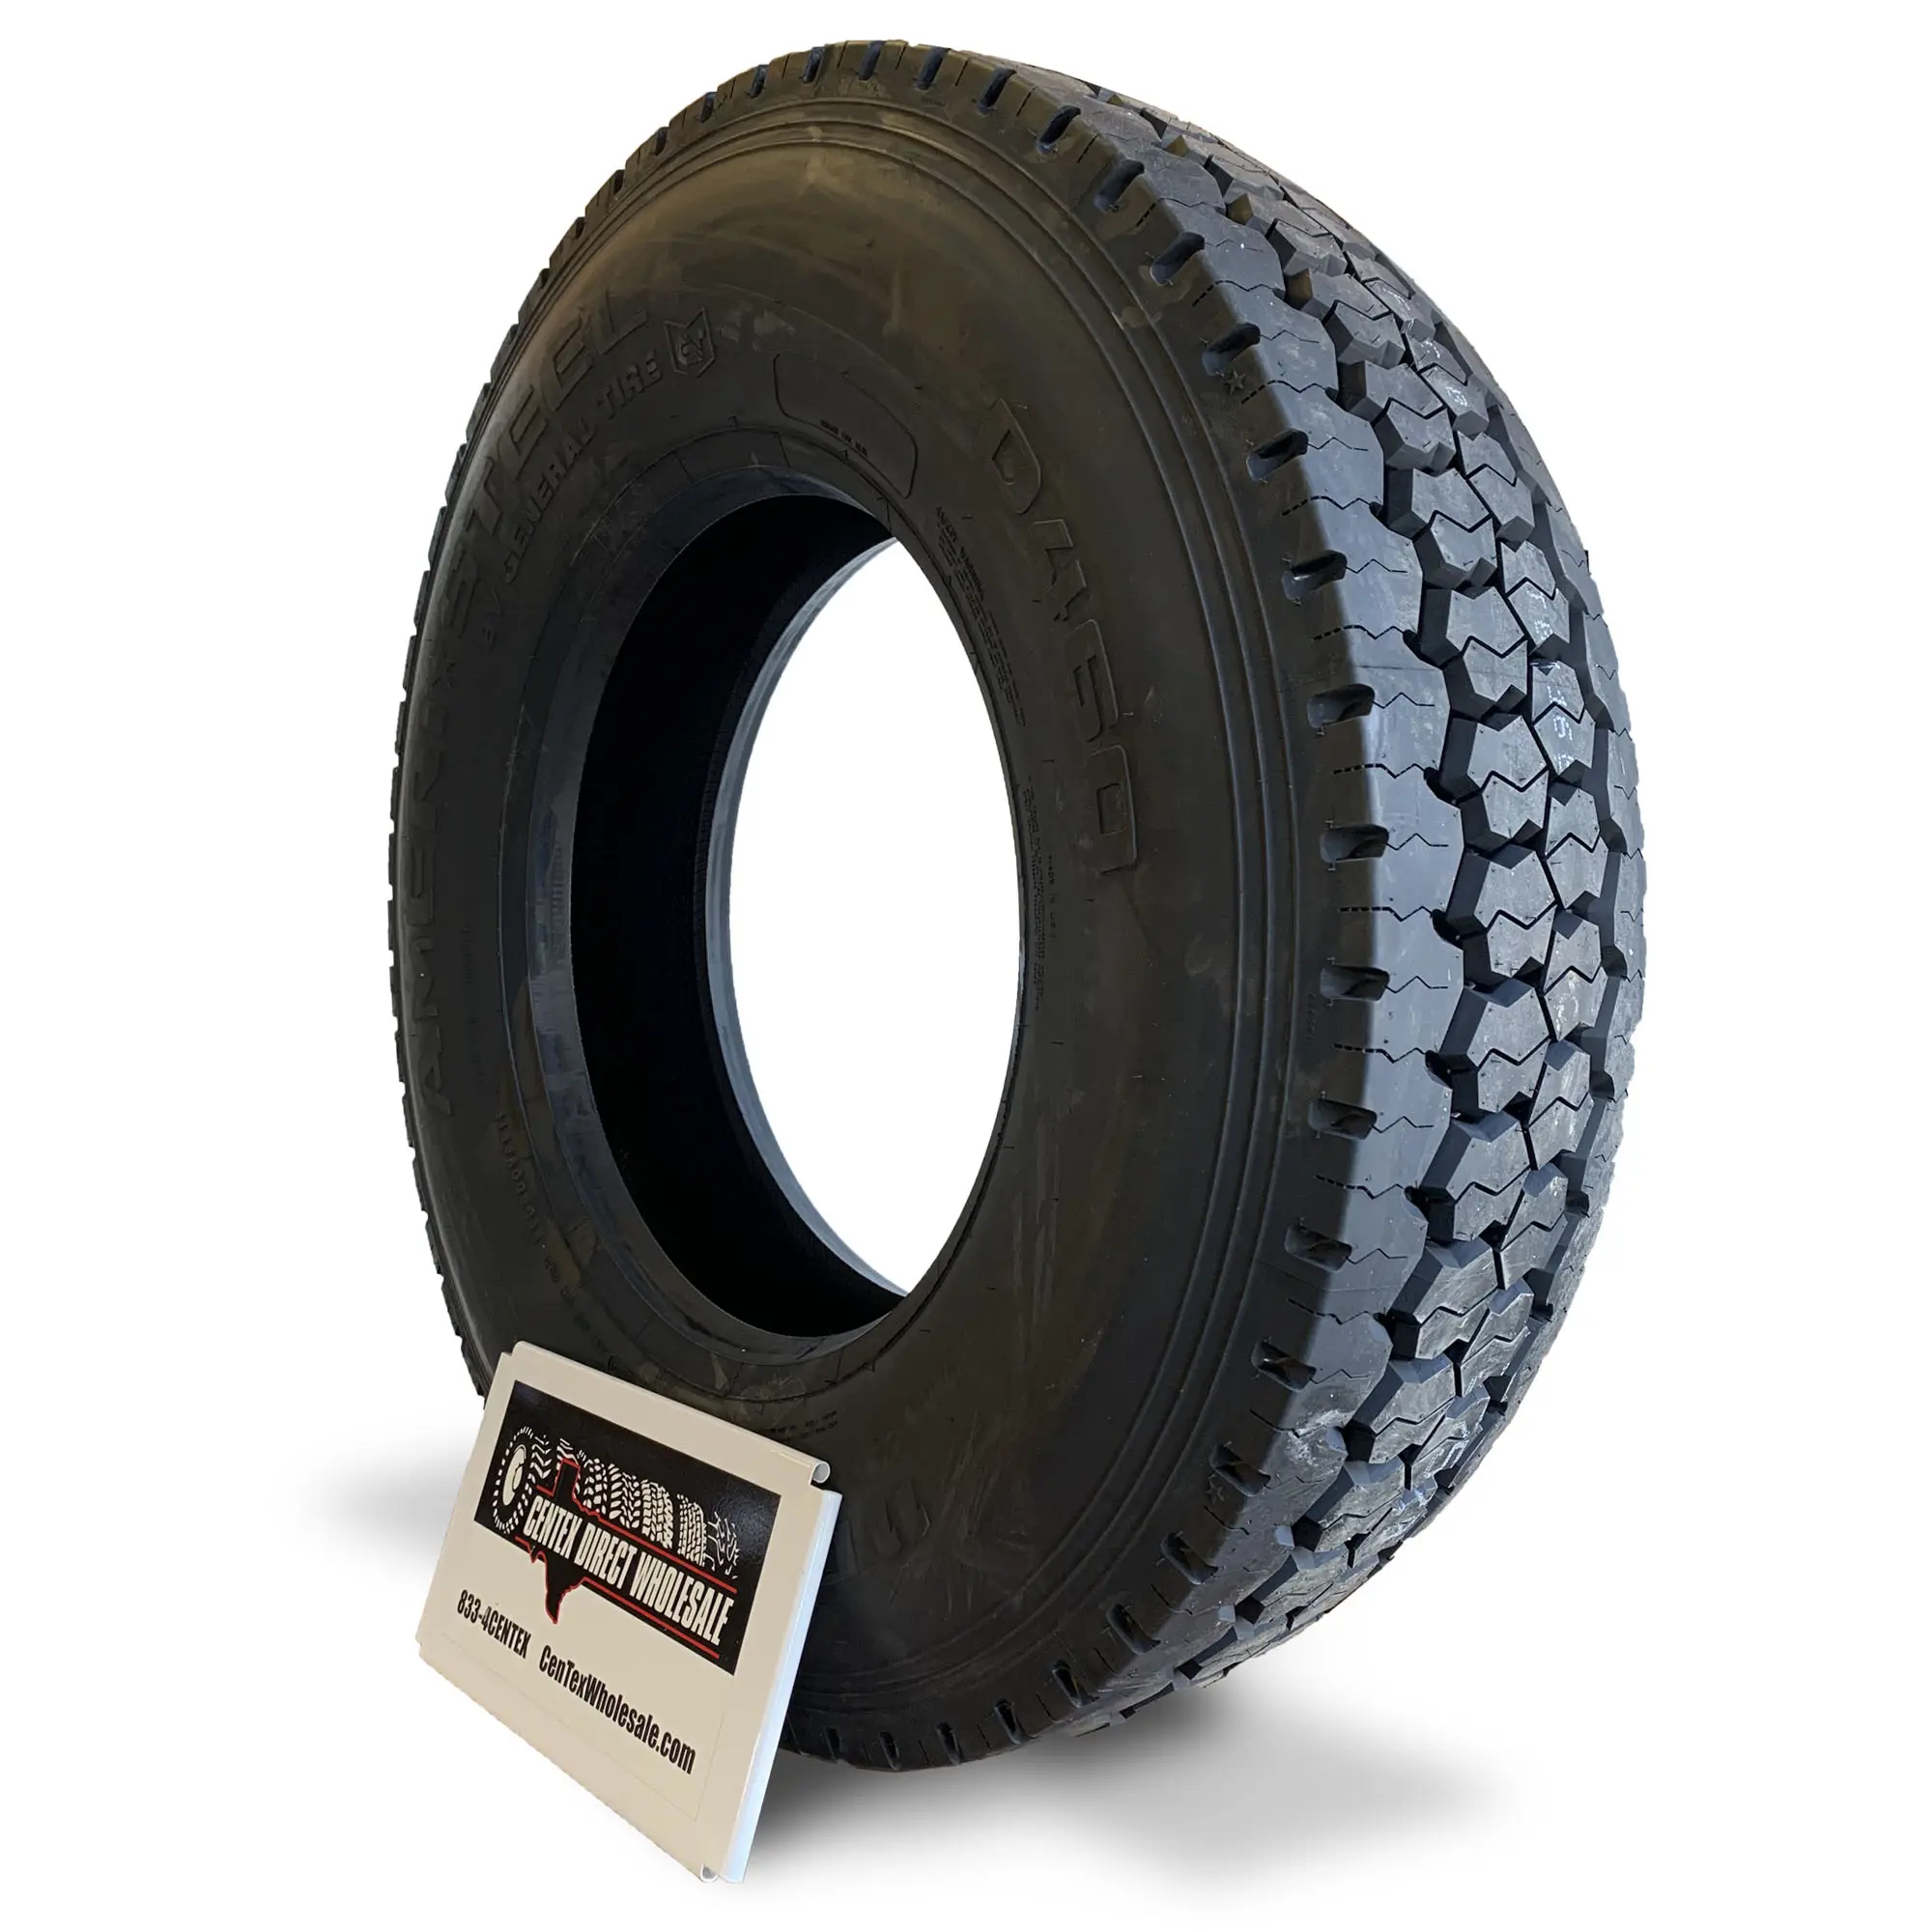 I pneumatici per autocarri all'ingrosso 80 r22.5 di alta qualità a prezzi di fabbrica 315 sono adatti per cerchi per camion 22.5x9.00